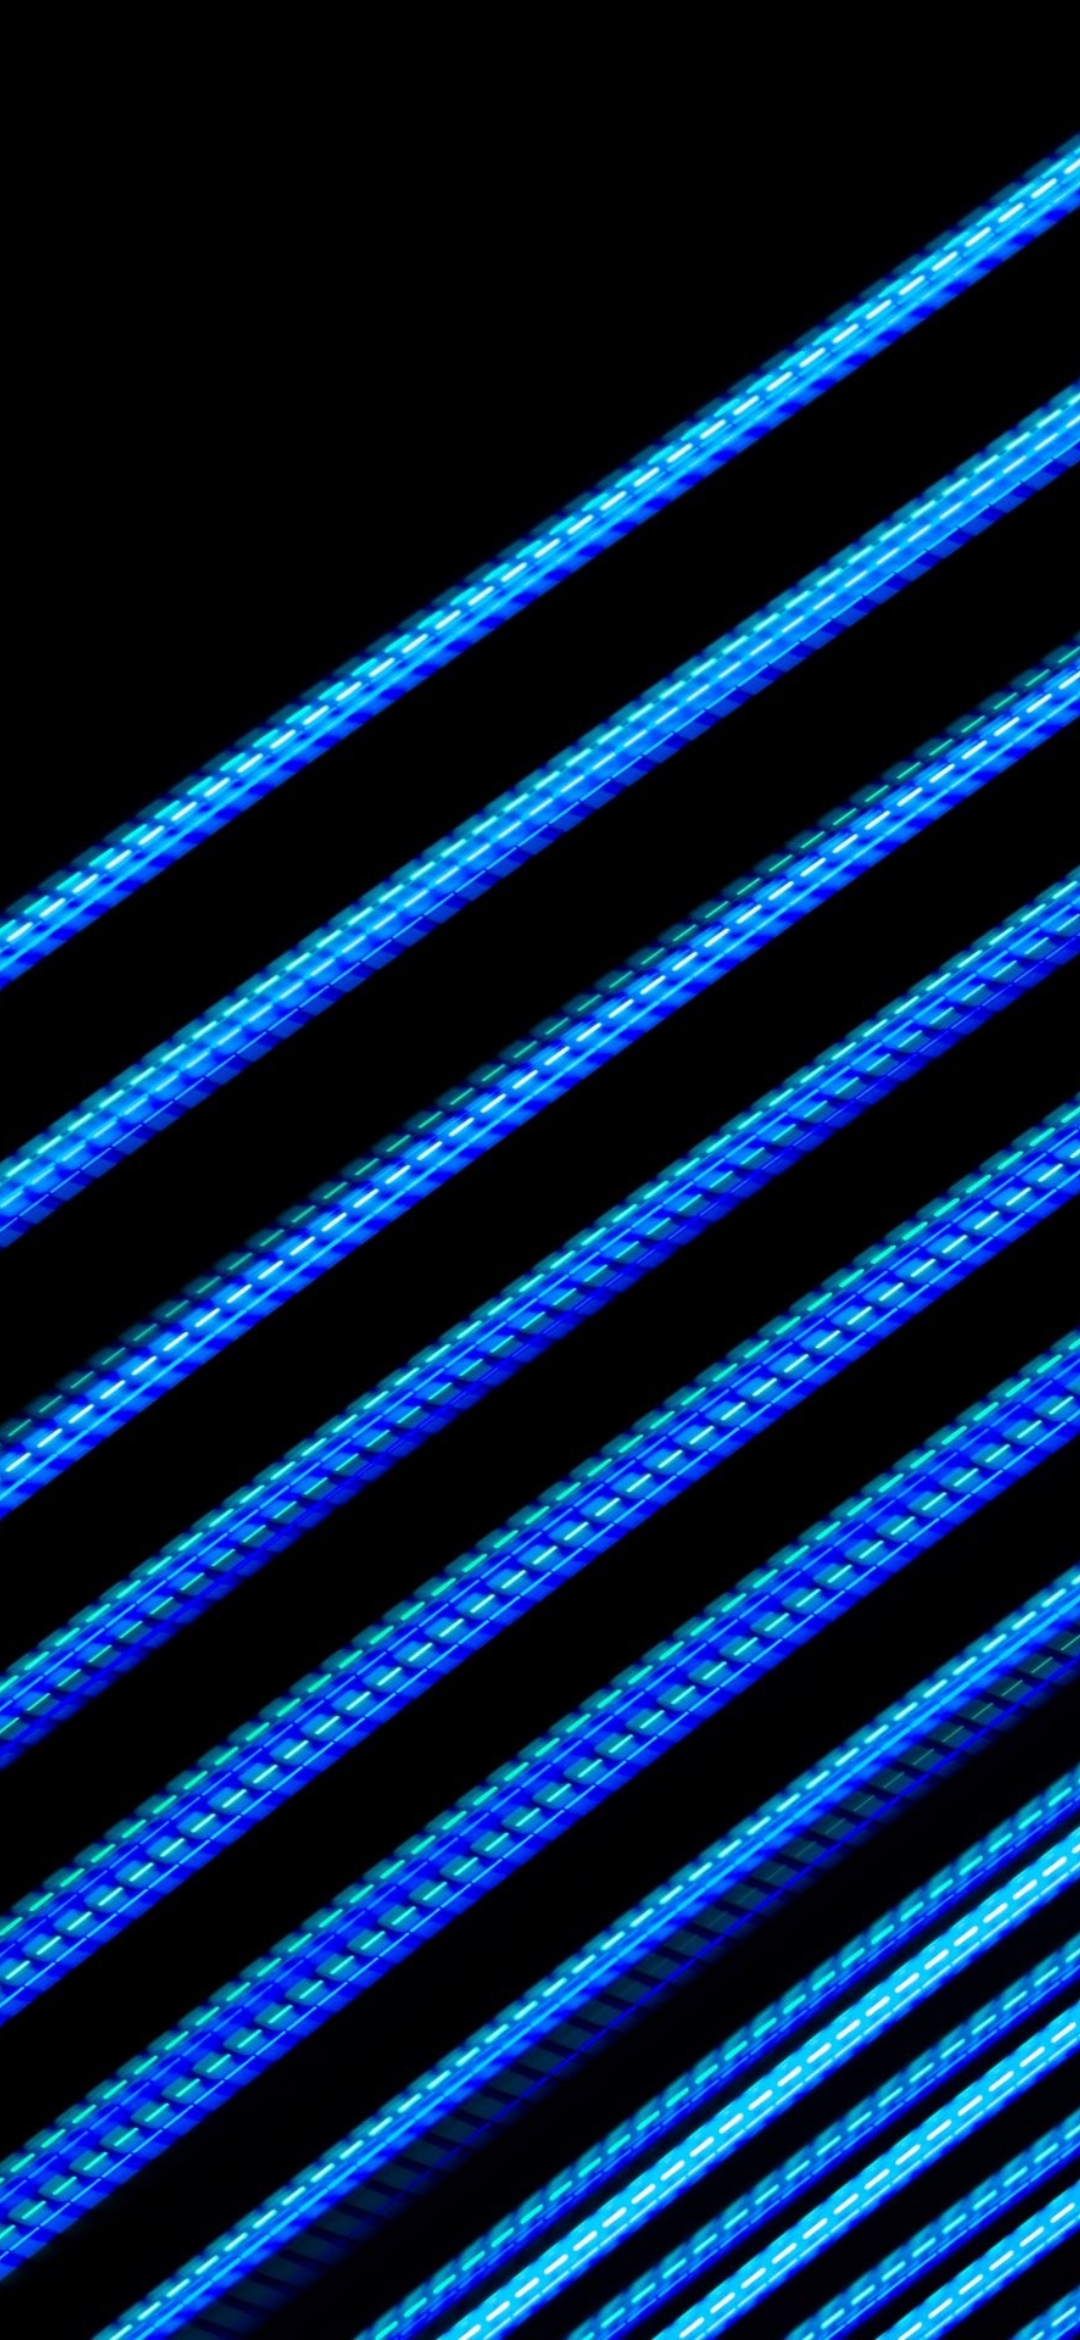 Wallpaper Light Nokia 5800 Xpressmusic Smartphone Azure Blue  Background  Download Free Image